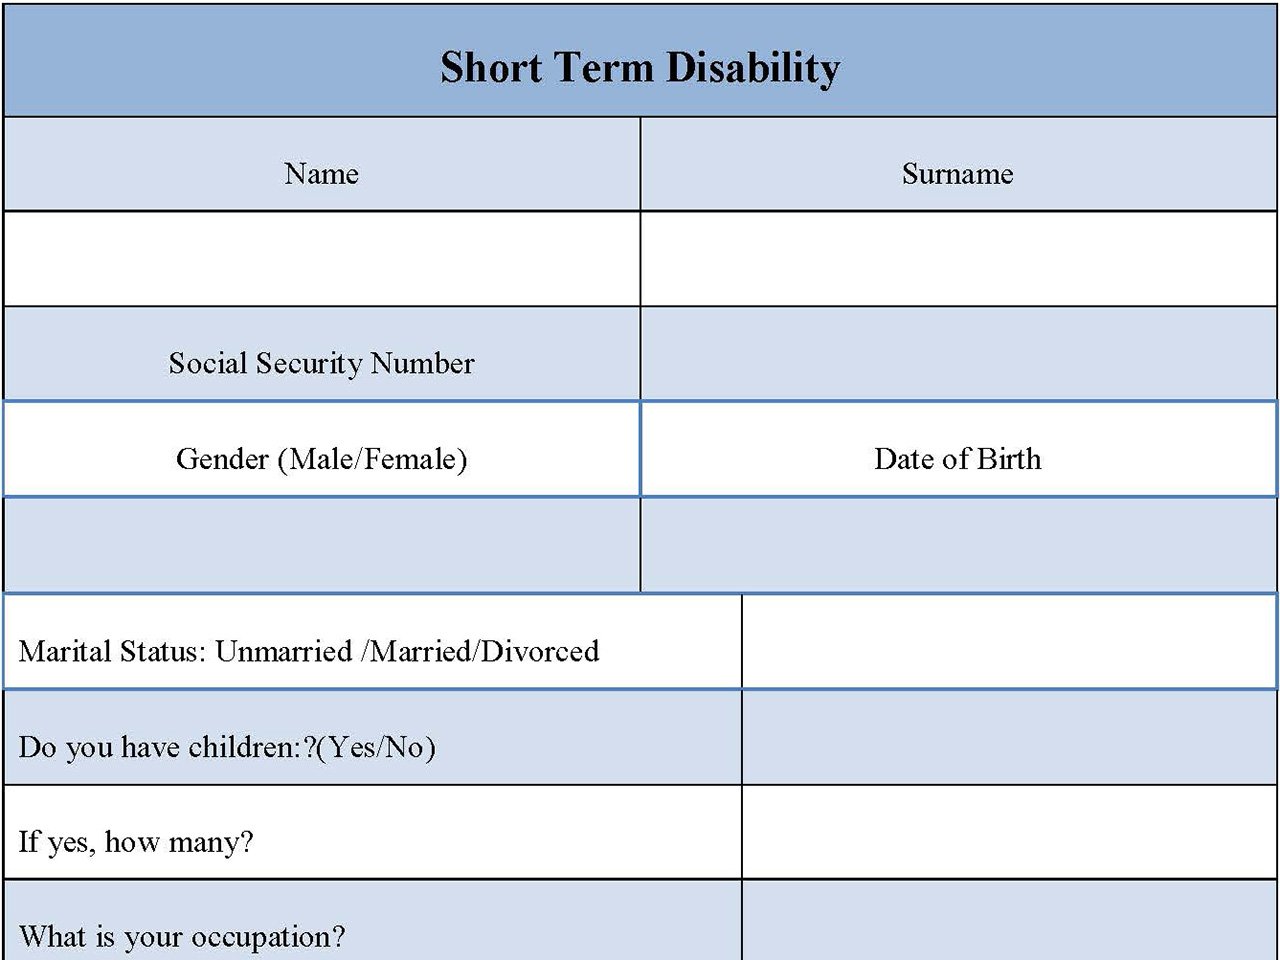 Short Term Disability Form